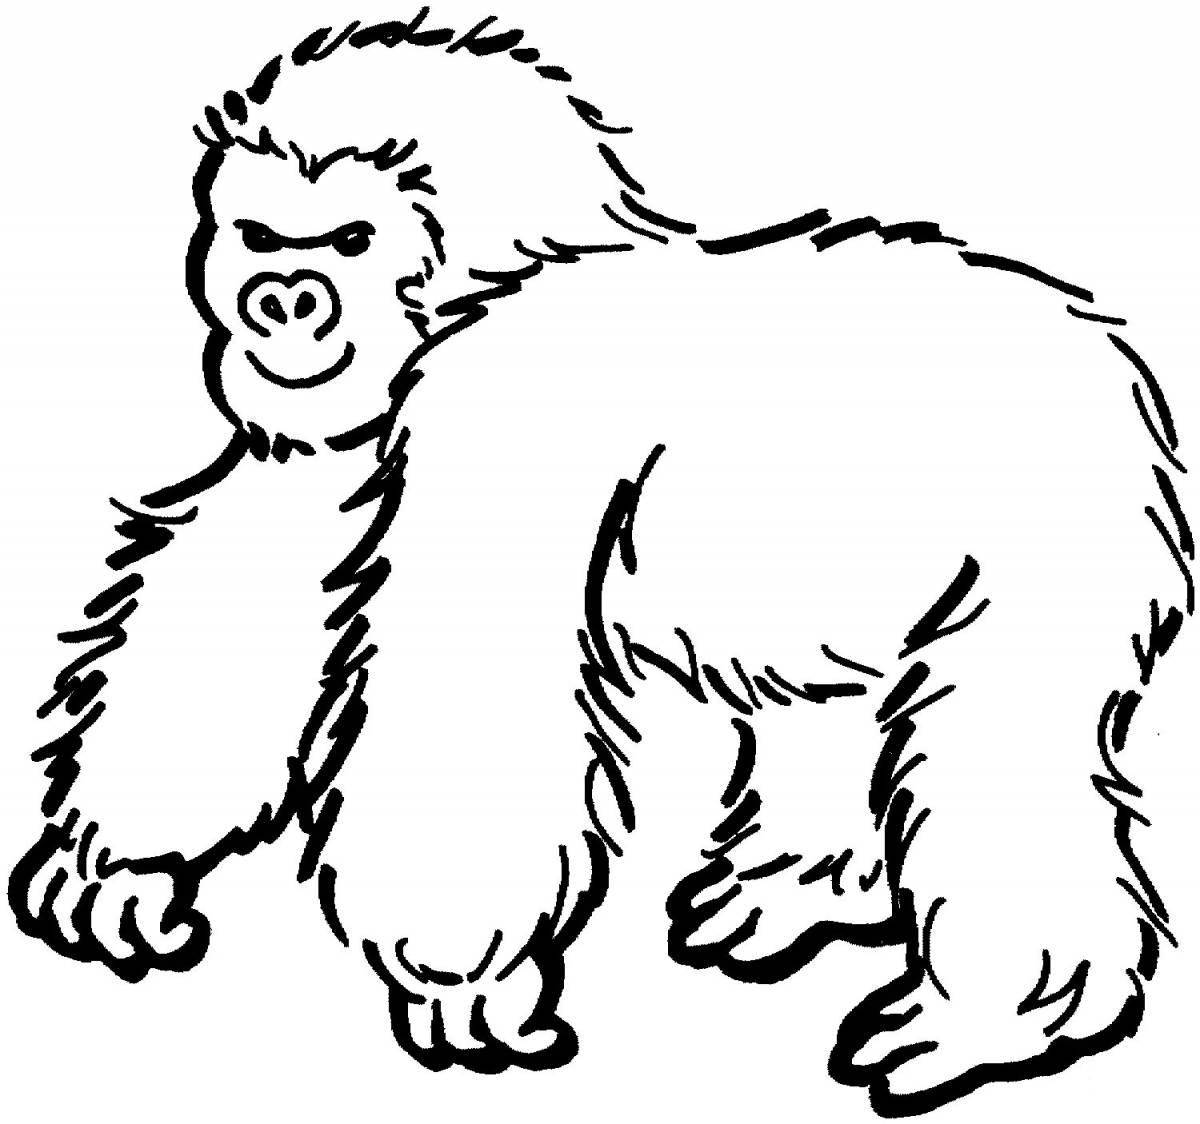 Creative gorilla coloring book for kids